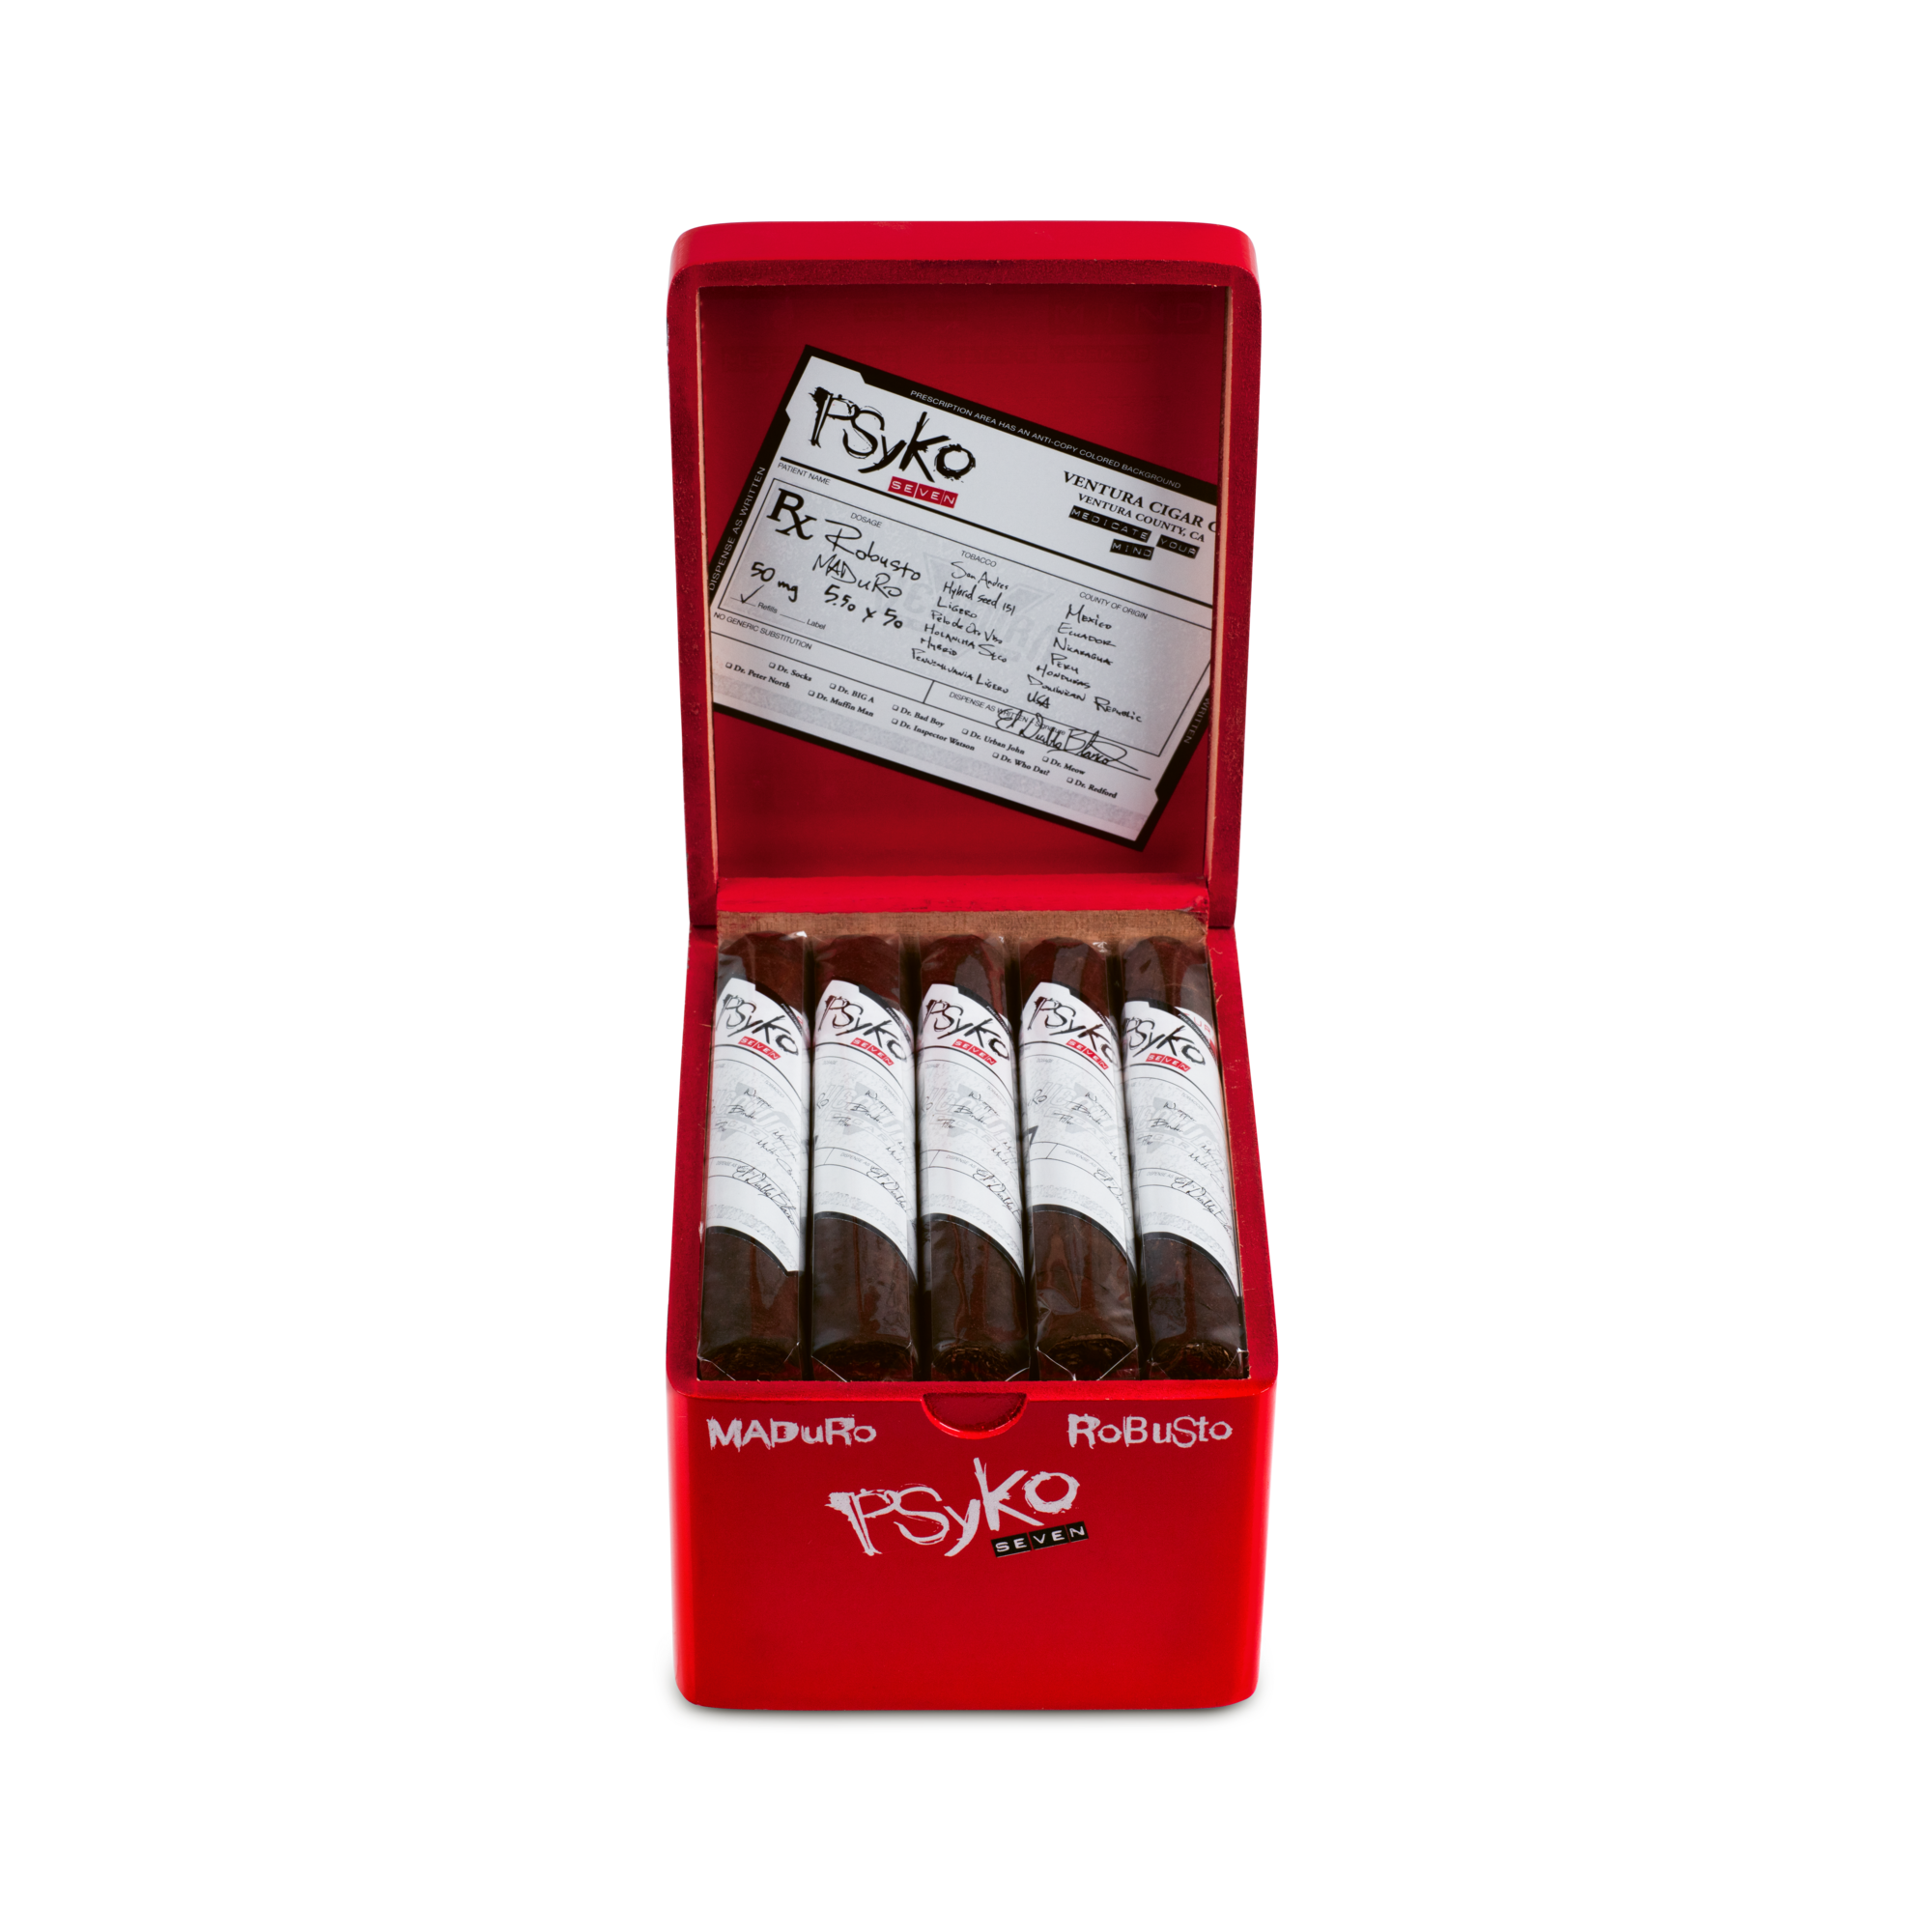 PSyKO Seven Maduro Robusto 20er Zigarren Box geöffnet